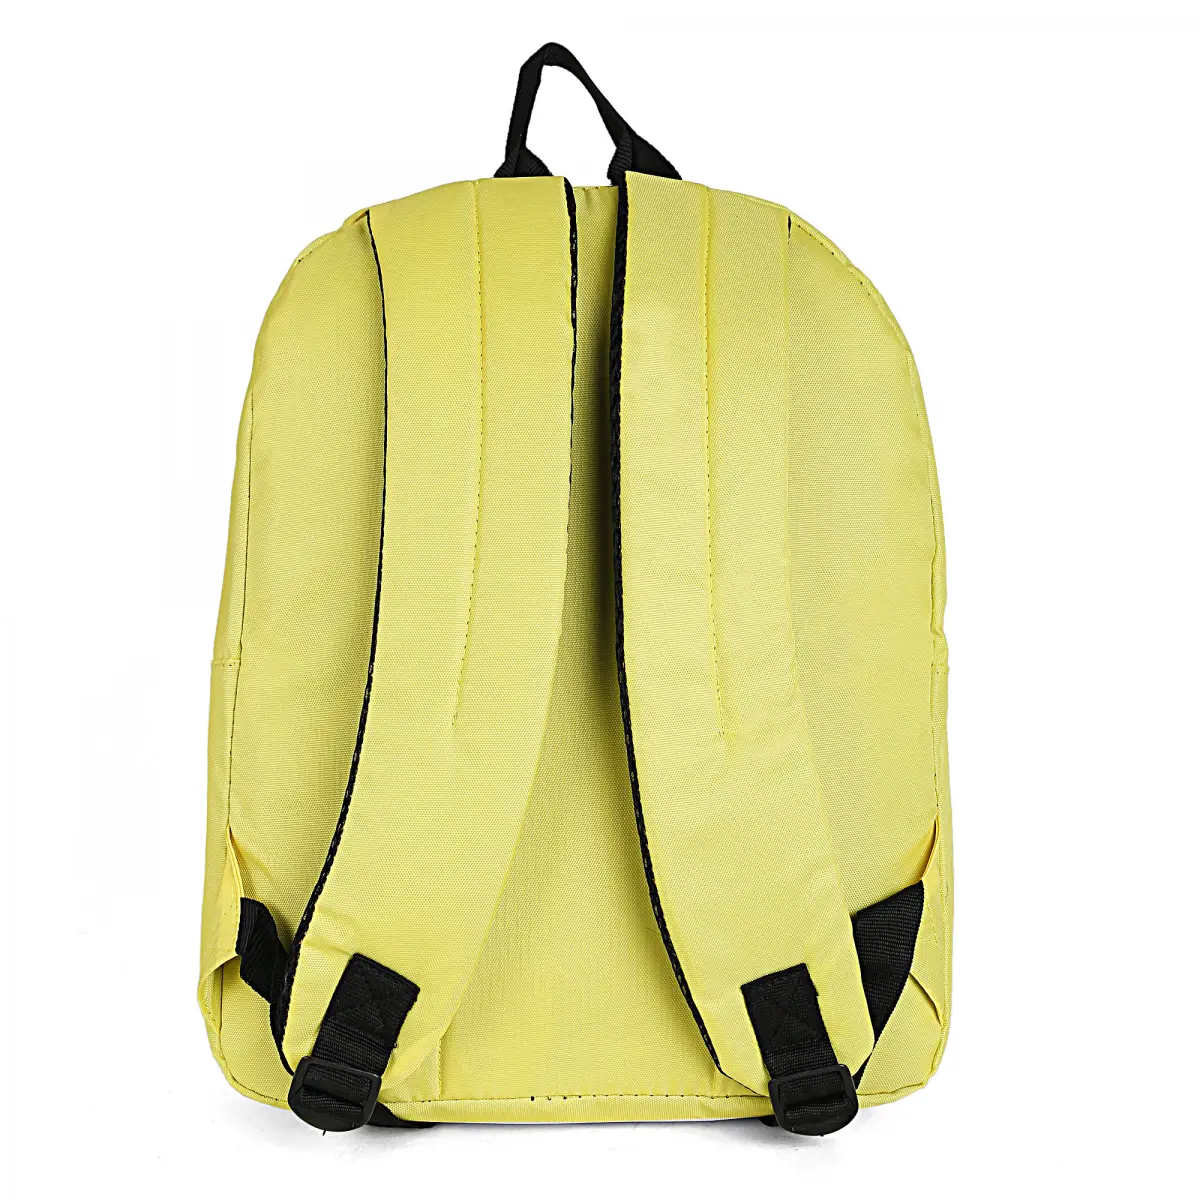 Love-Struck Bag | Shop Our Heart Shaped Purse Collection | Bags, Yellow  handbag, Yellow bag